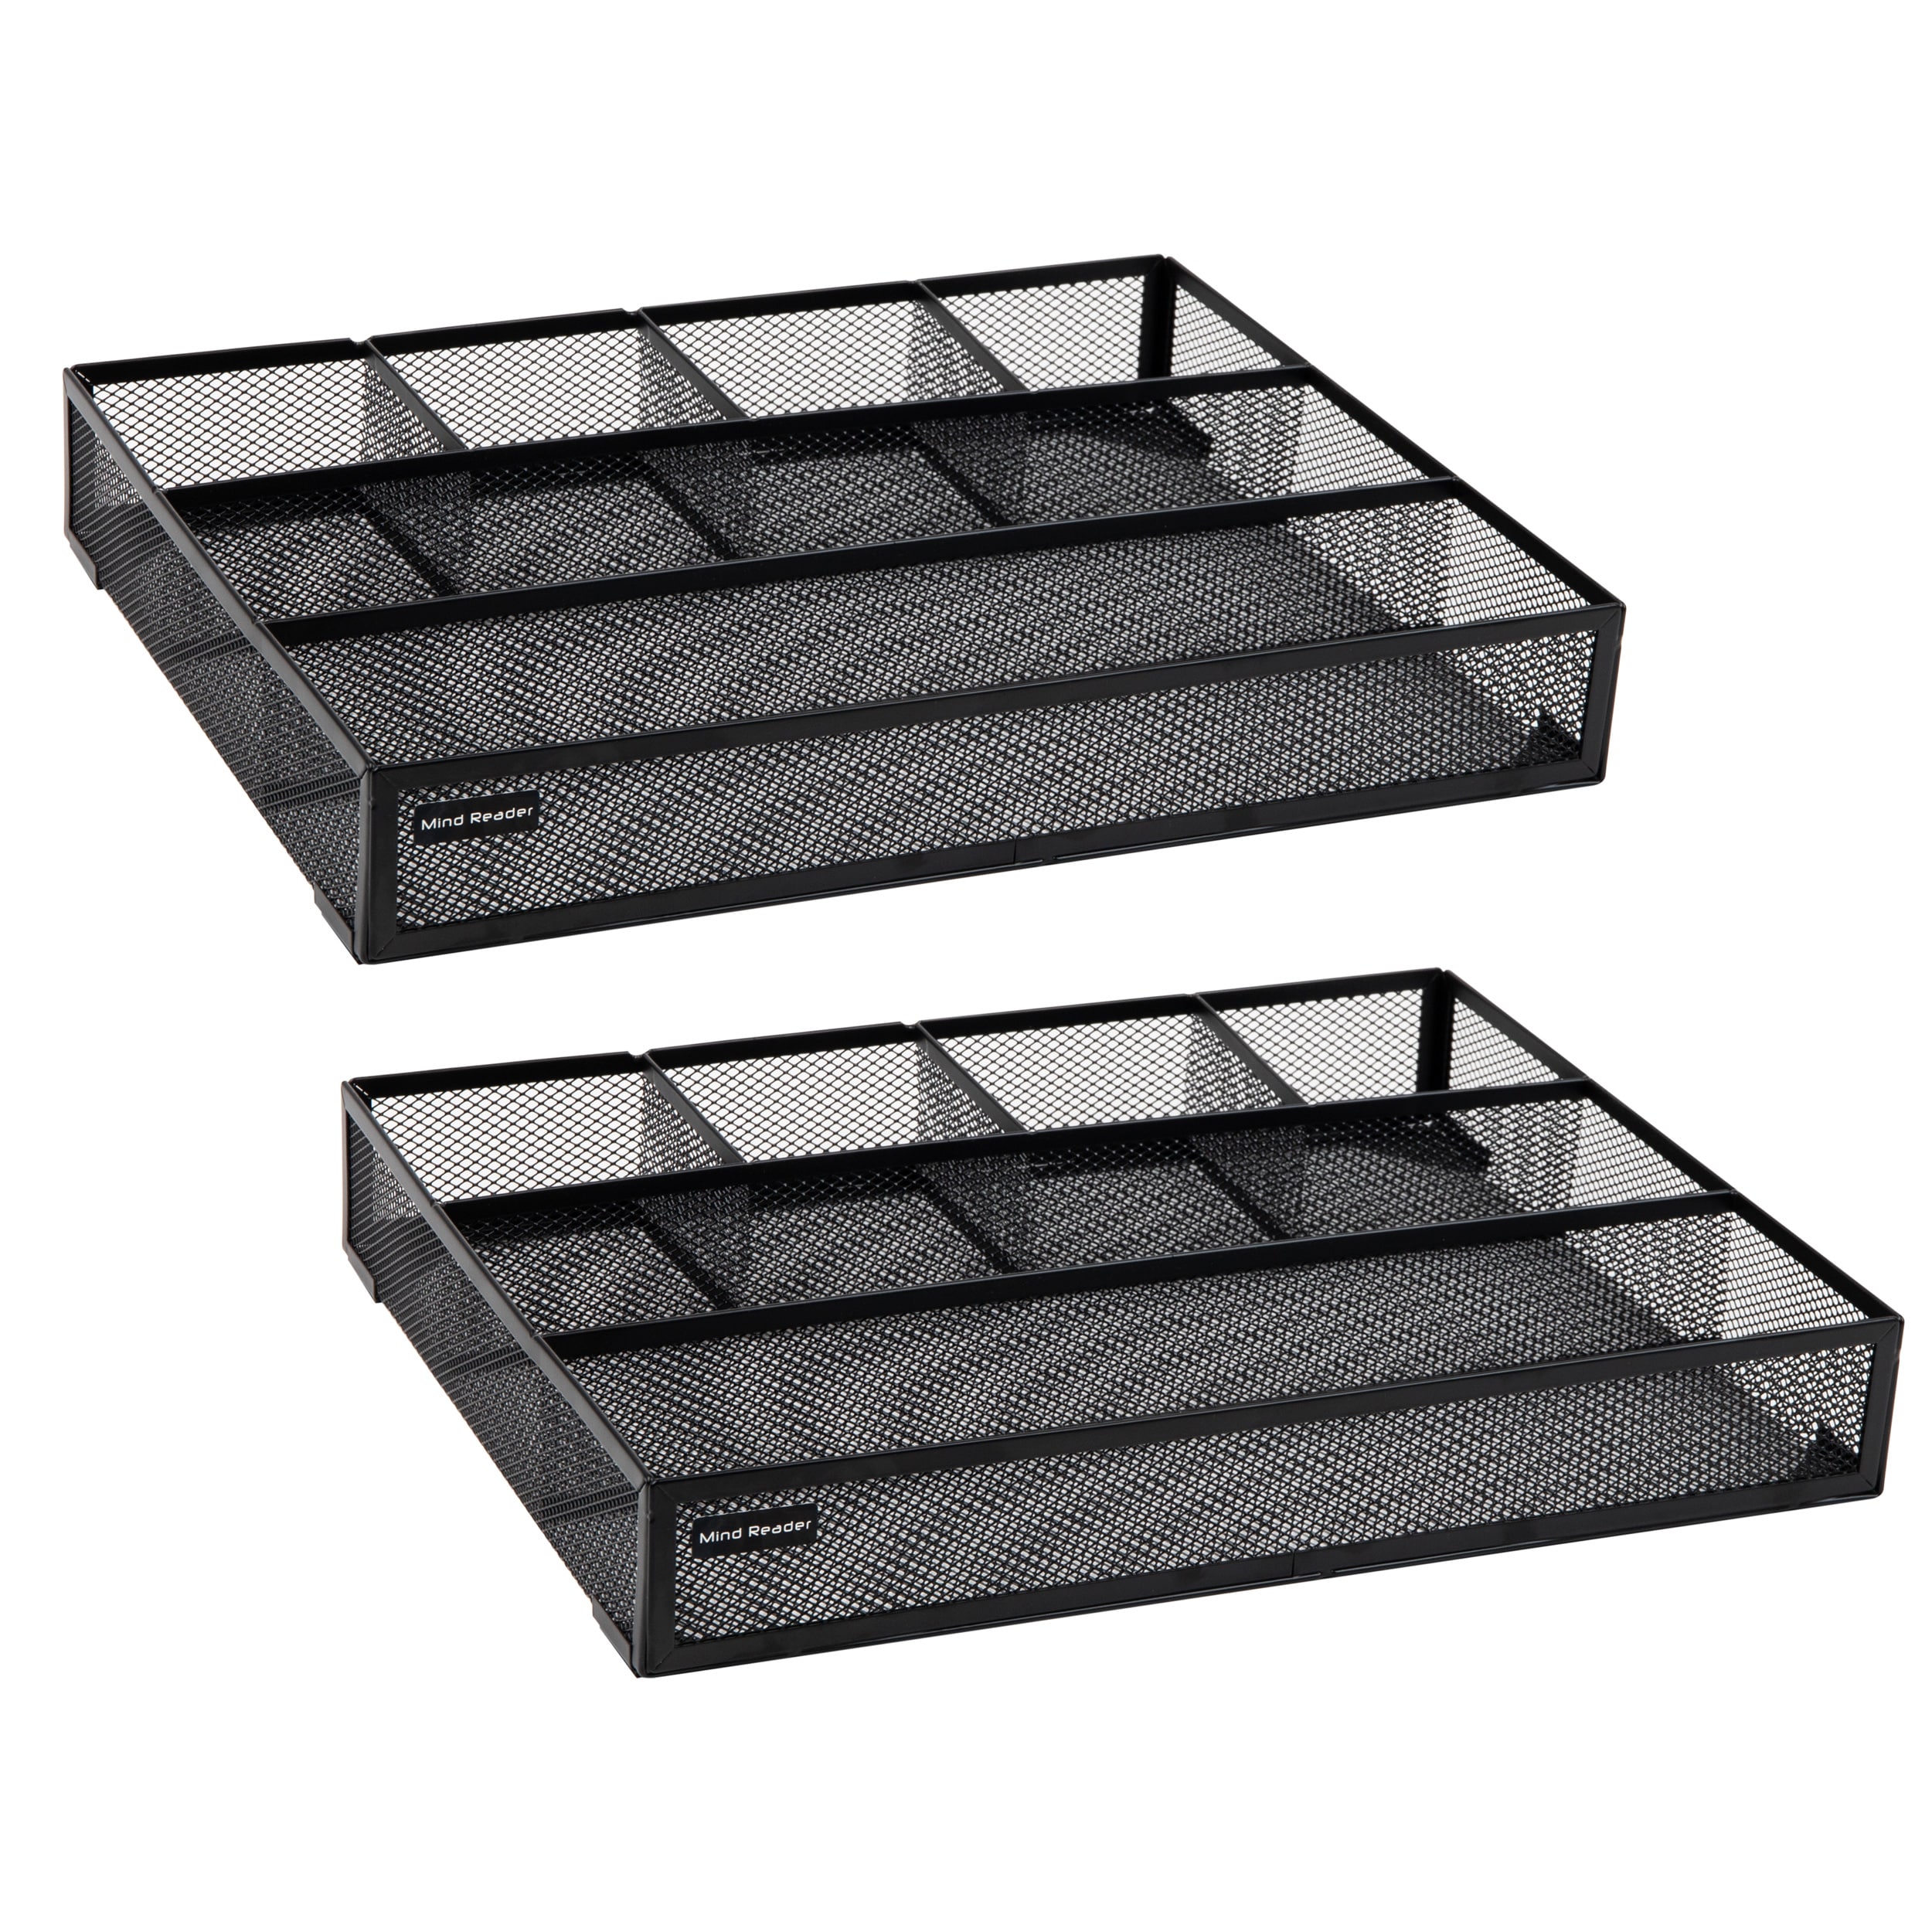 AUPSEN Desk Organizer Mesh Office Supplies Desk Accessories Features 5 Compartments + 1 Mini Sliding Drawer(Black)